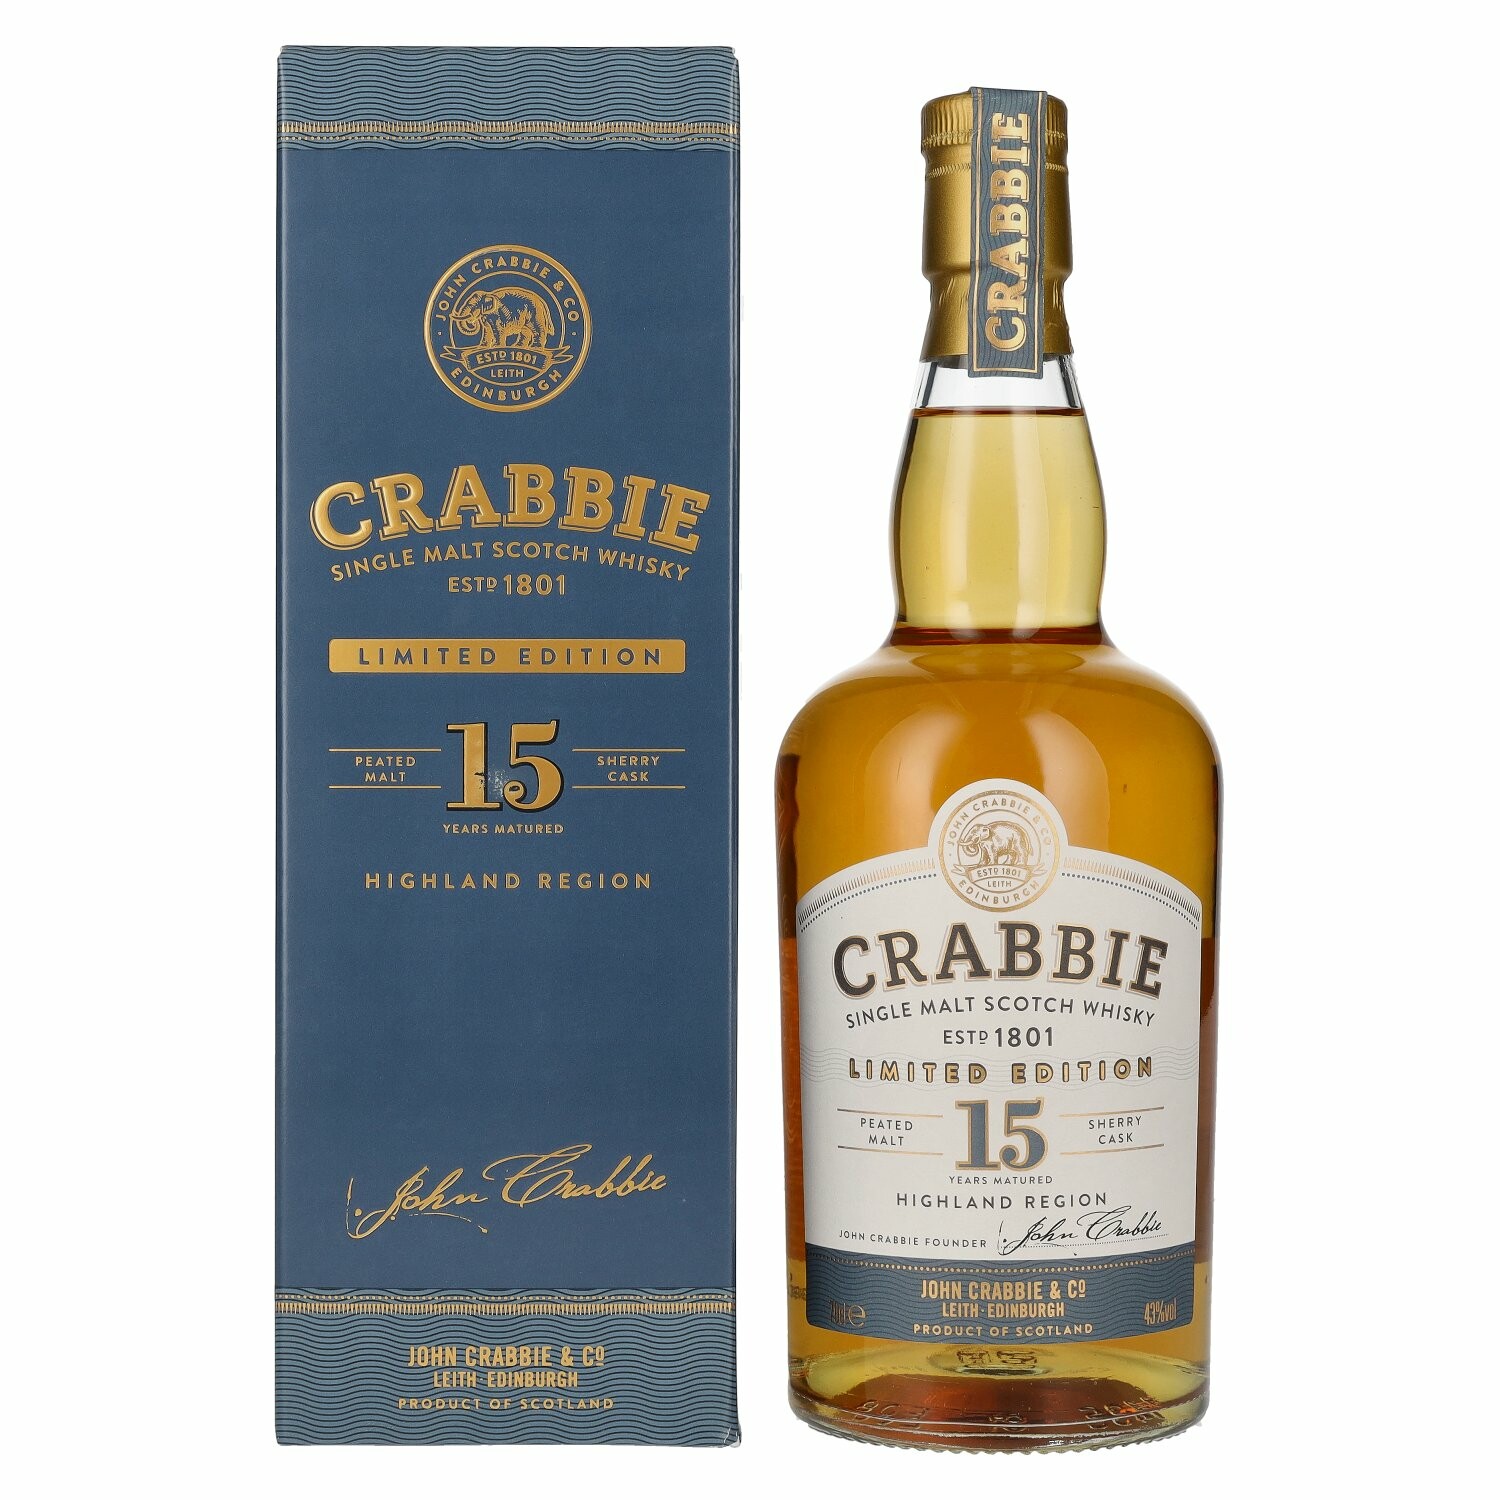 Crabbie's 15 Years Old Single Malt 43% Vol. 0,7l in Giftbox